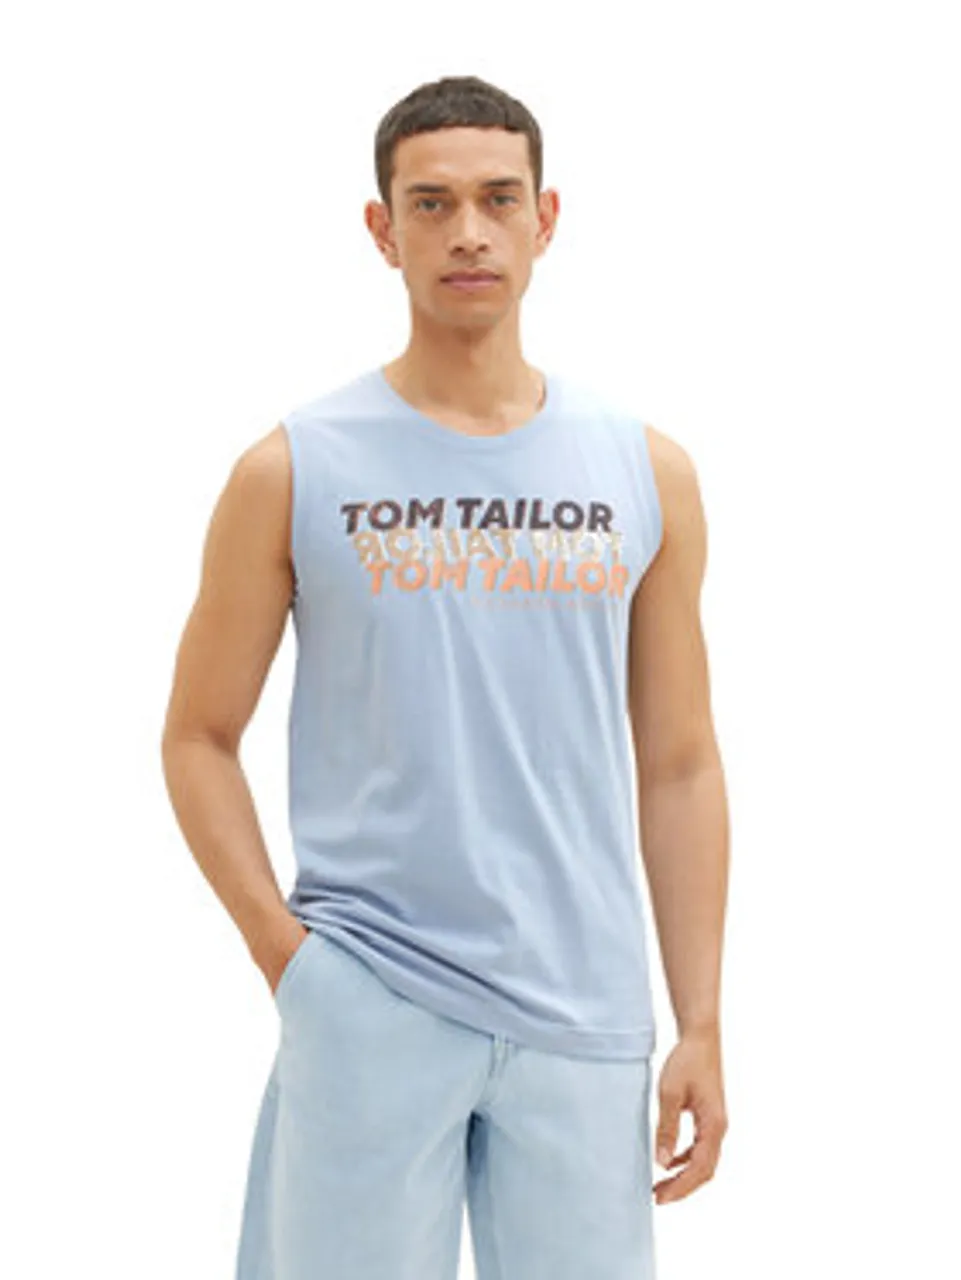 Tom Tailor Tank-Top 1036574 Himmelblau Regular Fit